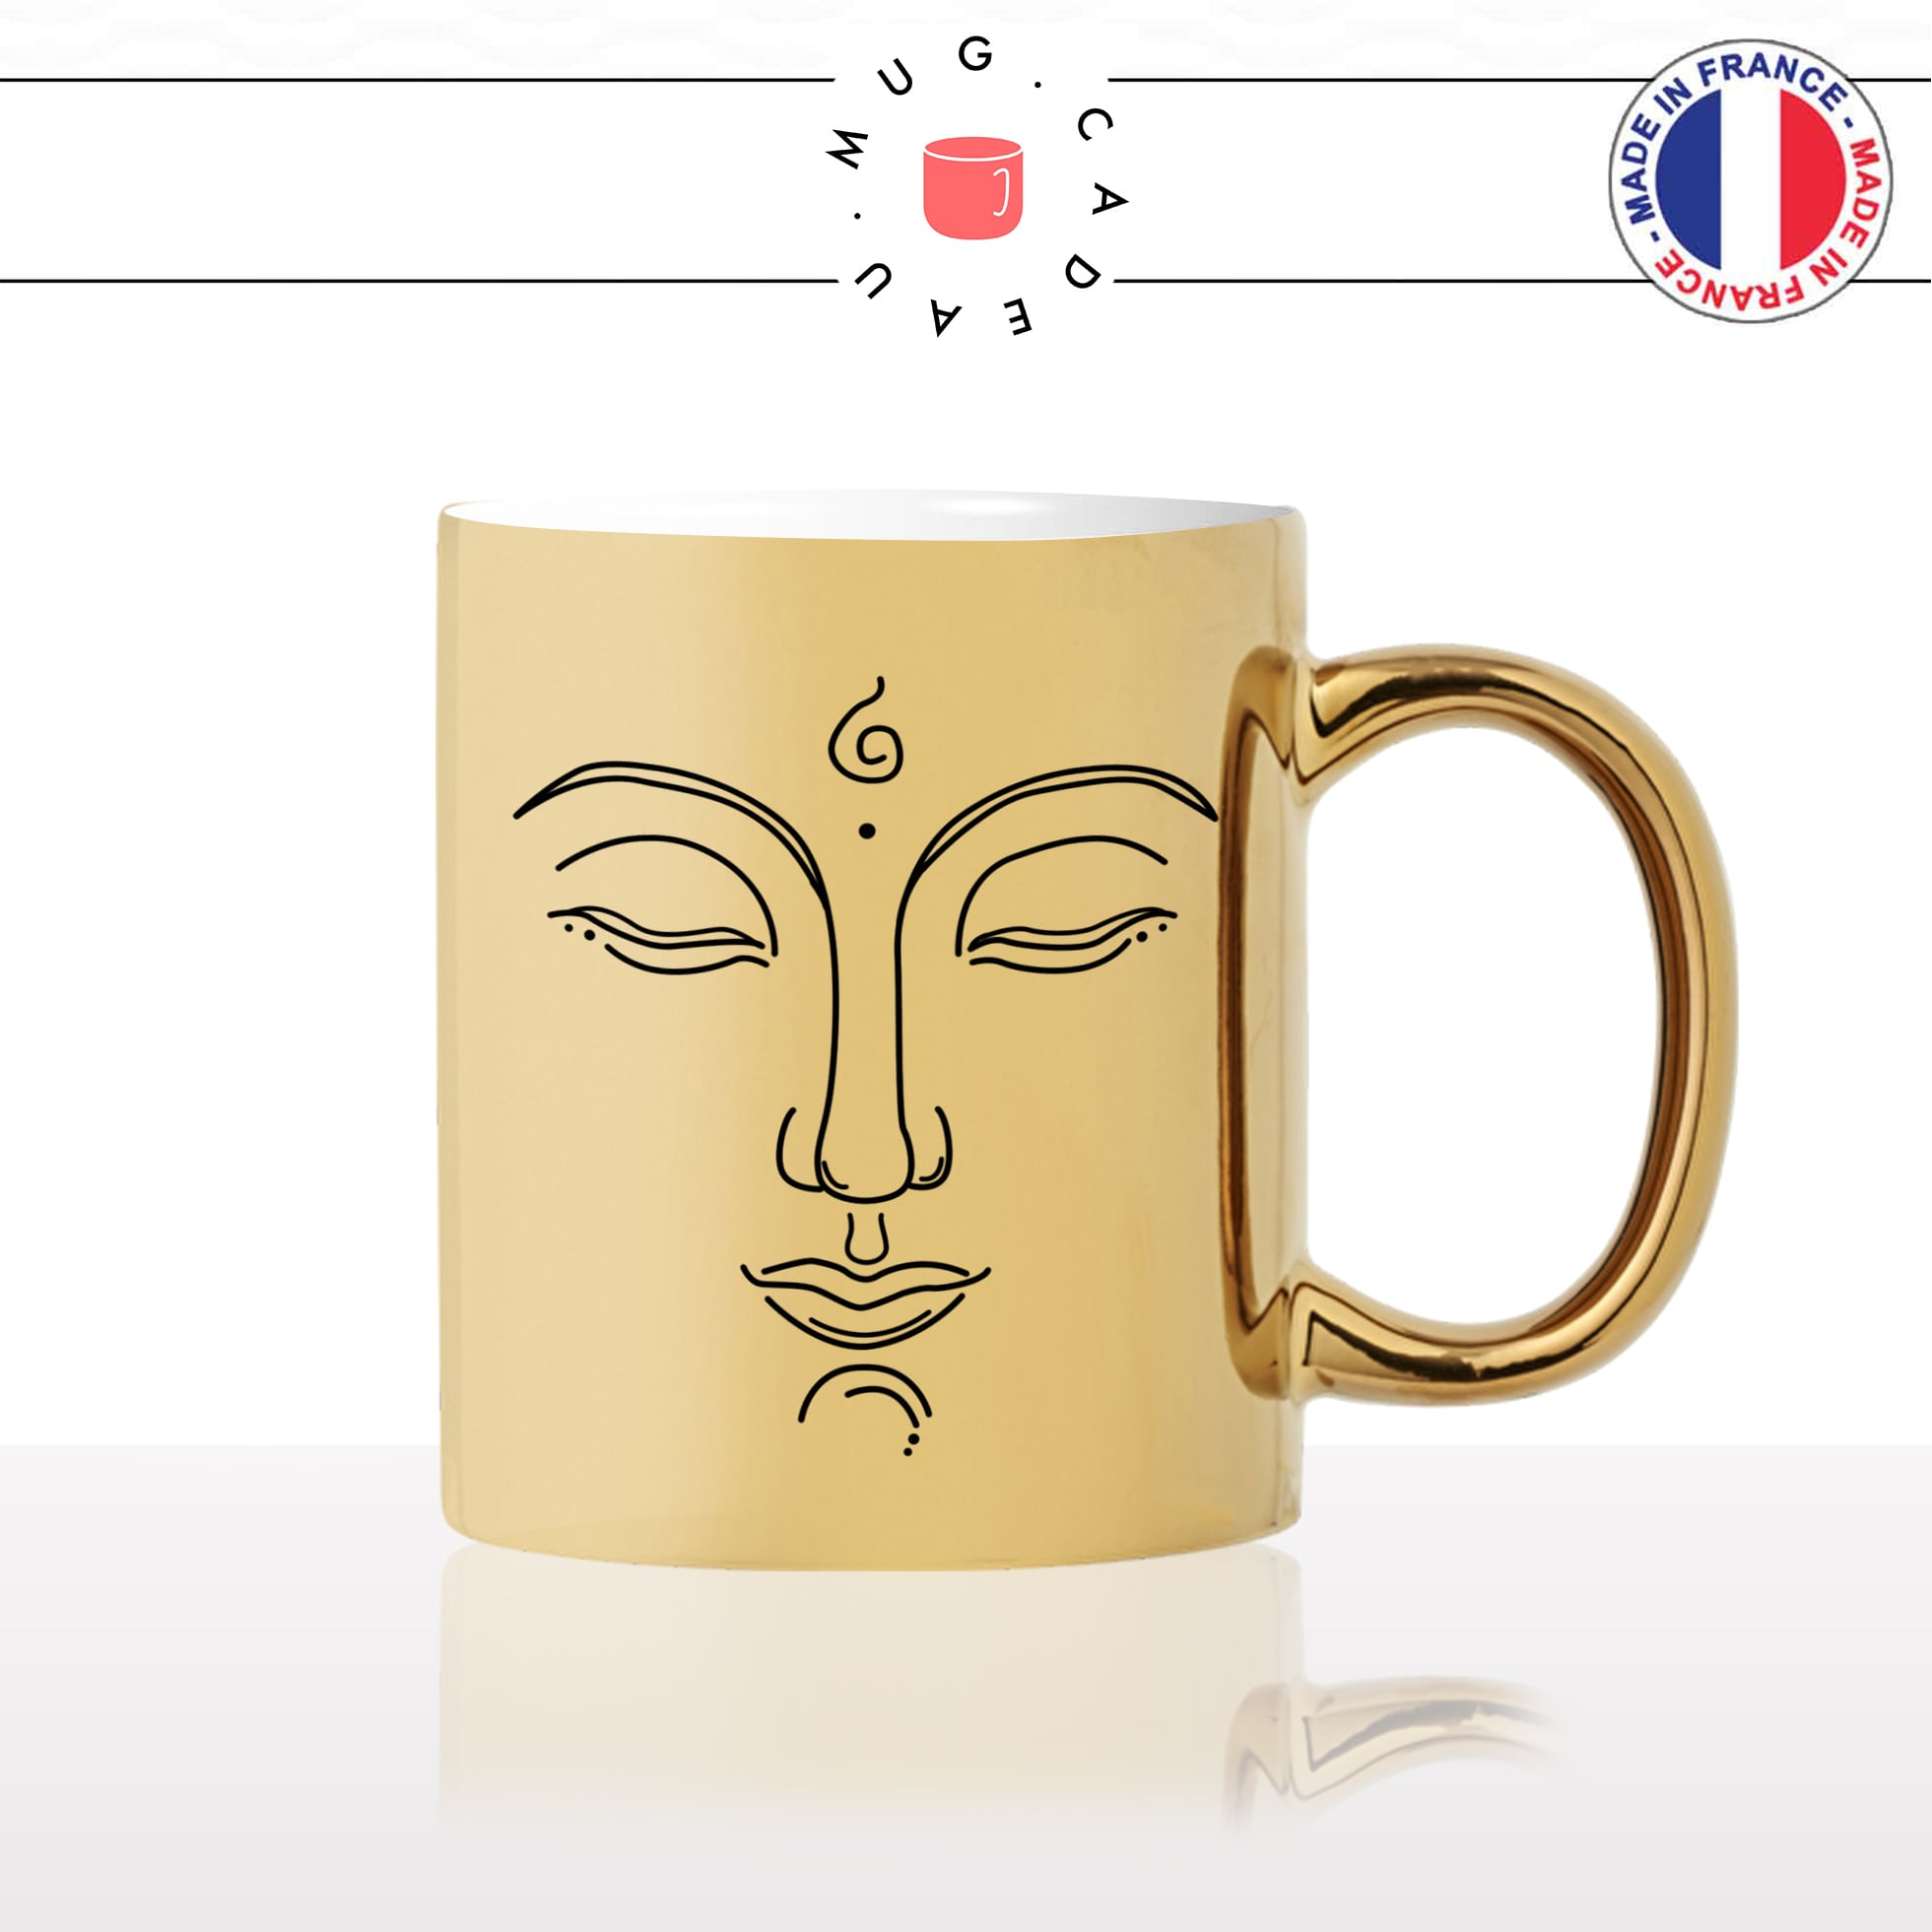 mug-tasse-gold-or-doré-symbol-bouddhiste-visage-bouddha-meditation-yoga-original-dessin-religion-fun-idée-cadeau-personnalisé-café-thé2-min